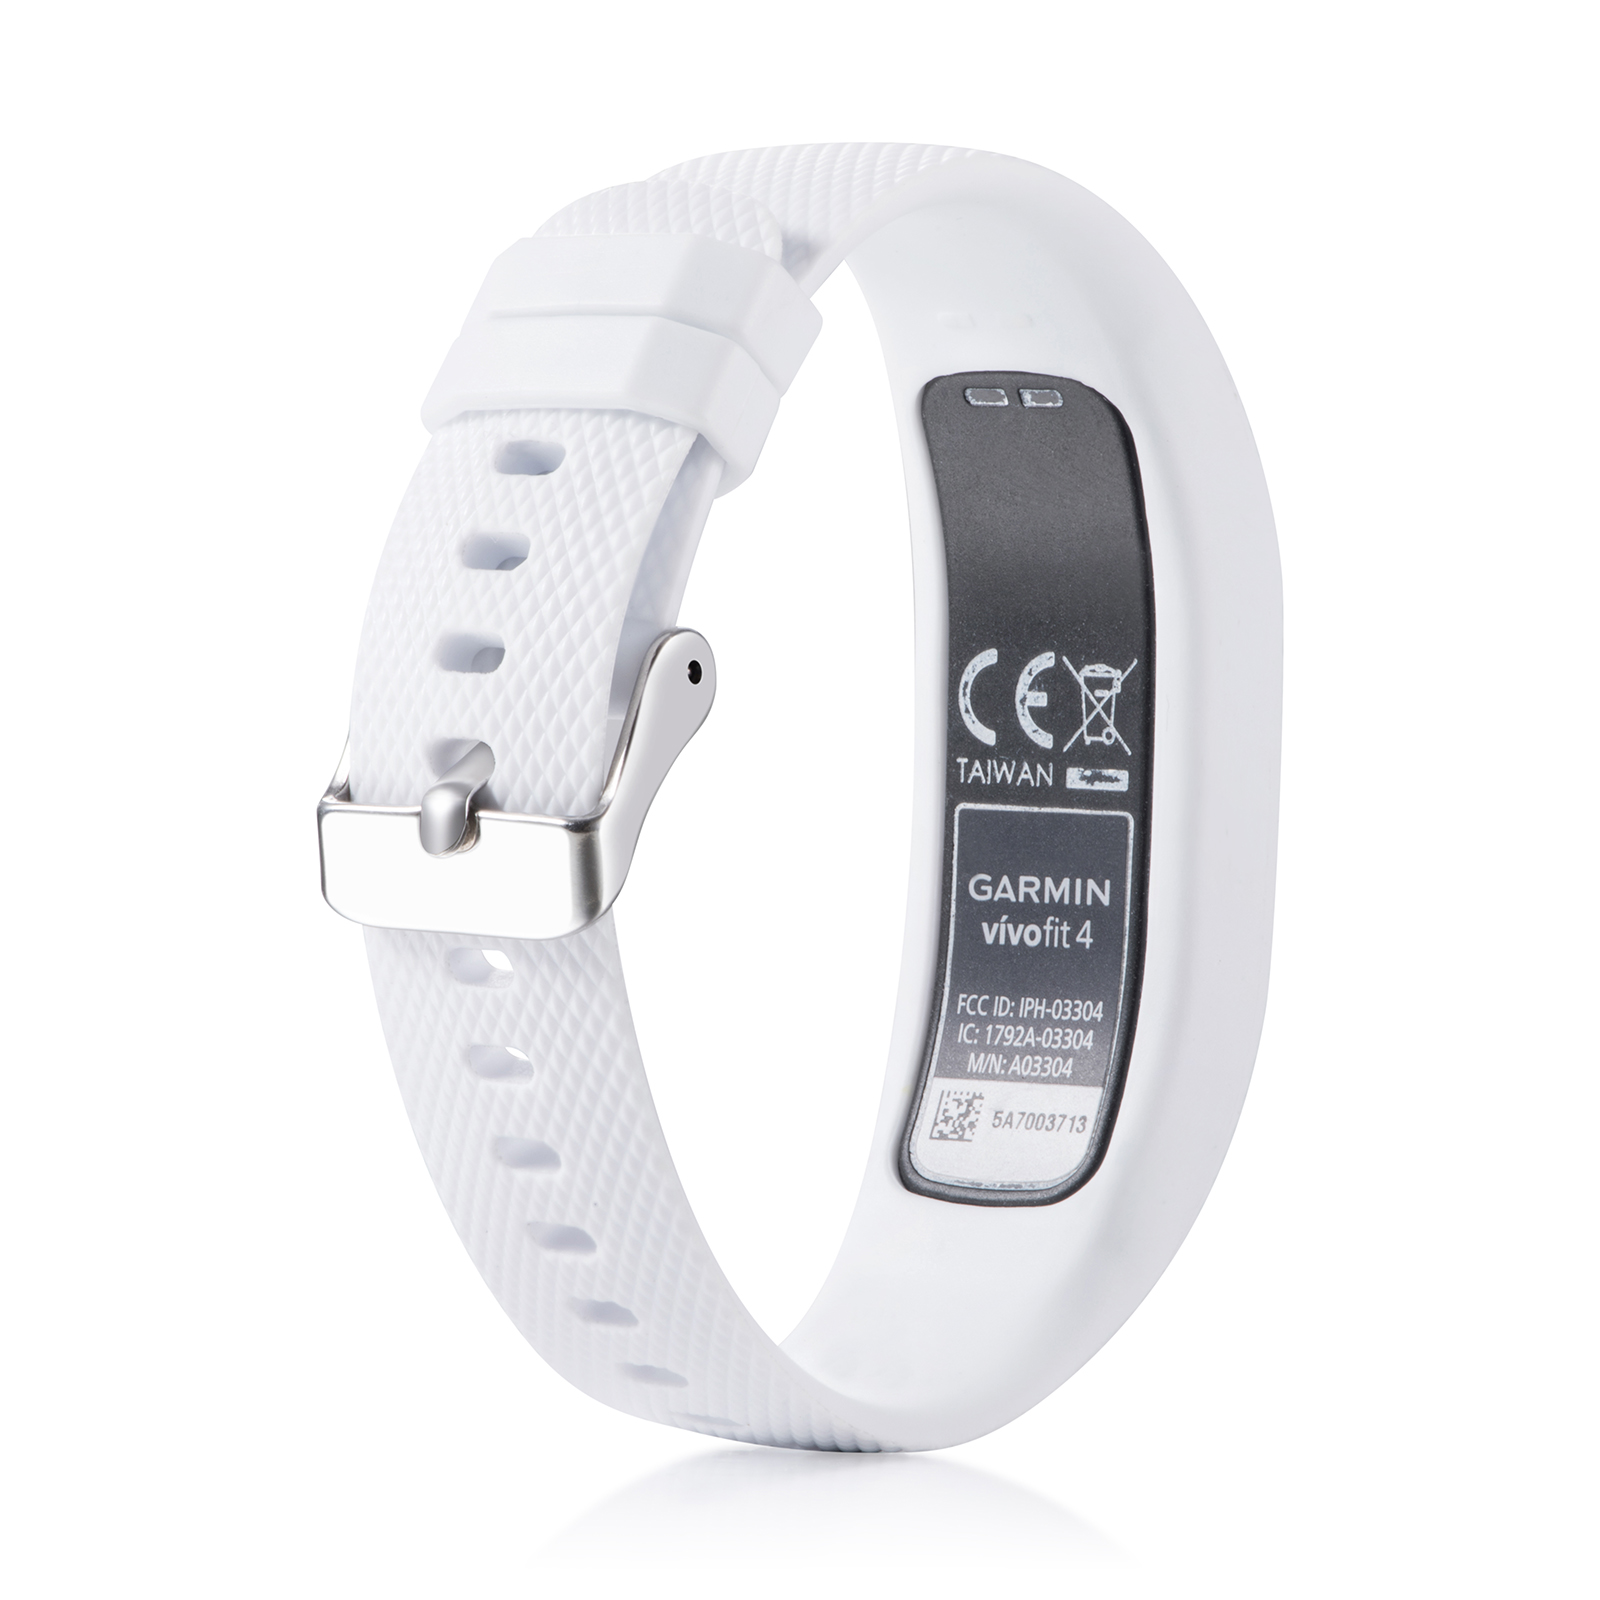 Soft Sillicone Wristband Strap For Garmin Vivofit 4 Activity Fitness Tracker Replacement Band For Garmin Vivofit4 Smartwatch